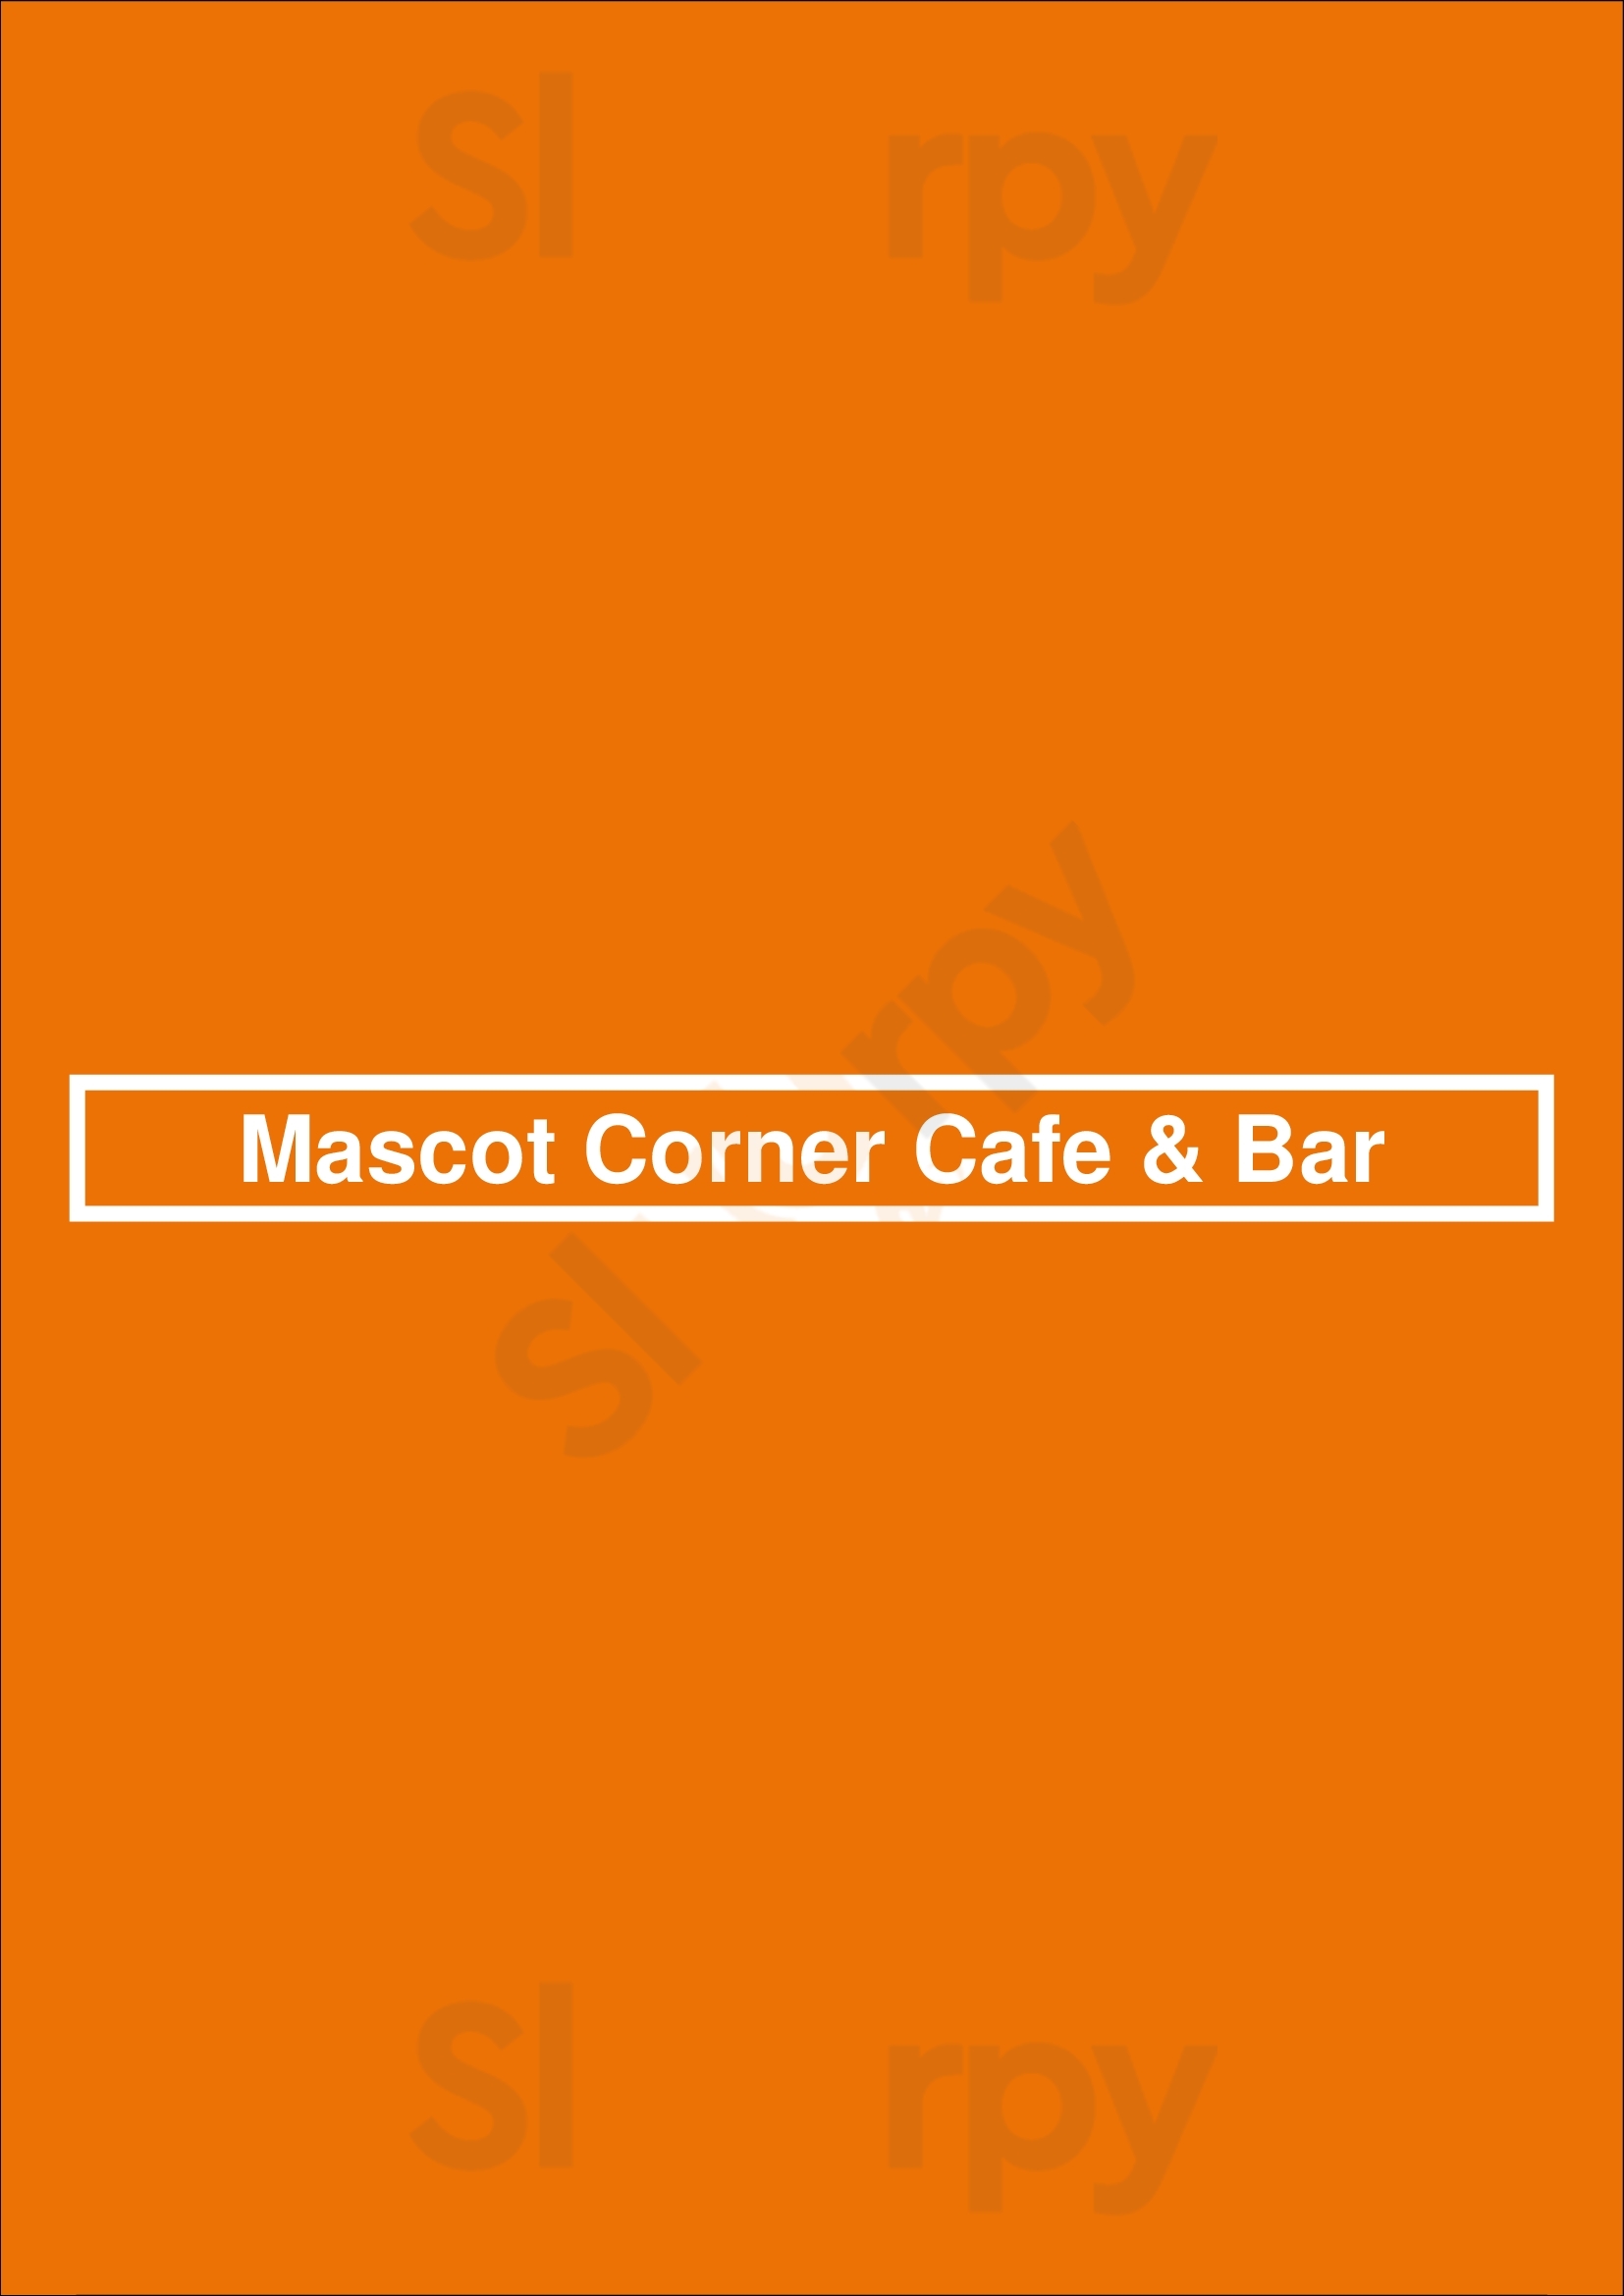 Mascot Corner Cafe & Bar Mascot Menu - 1